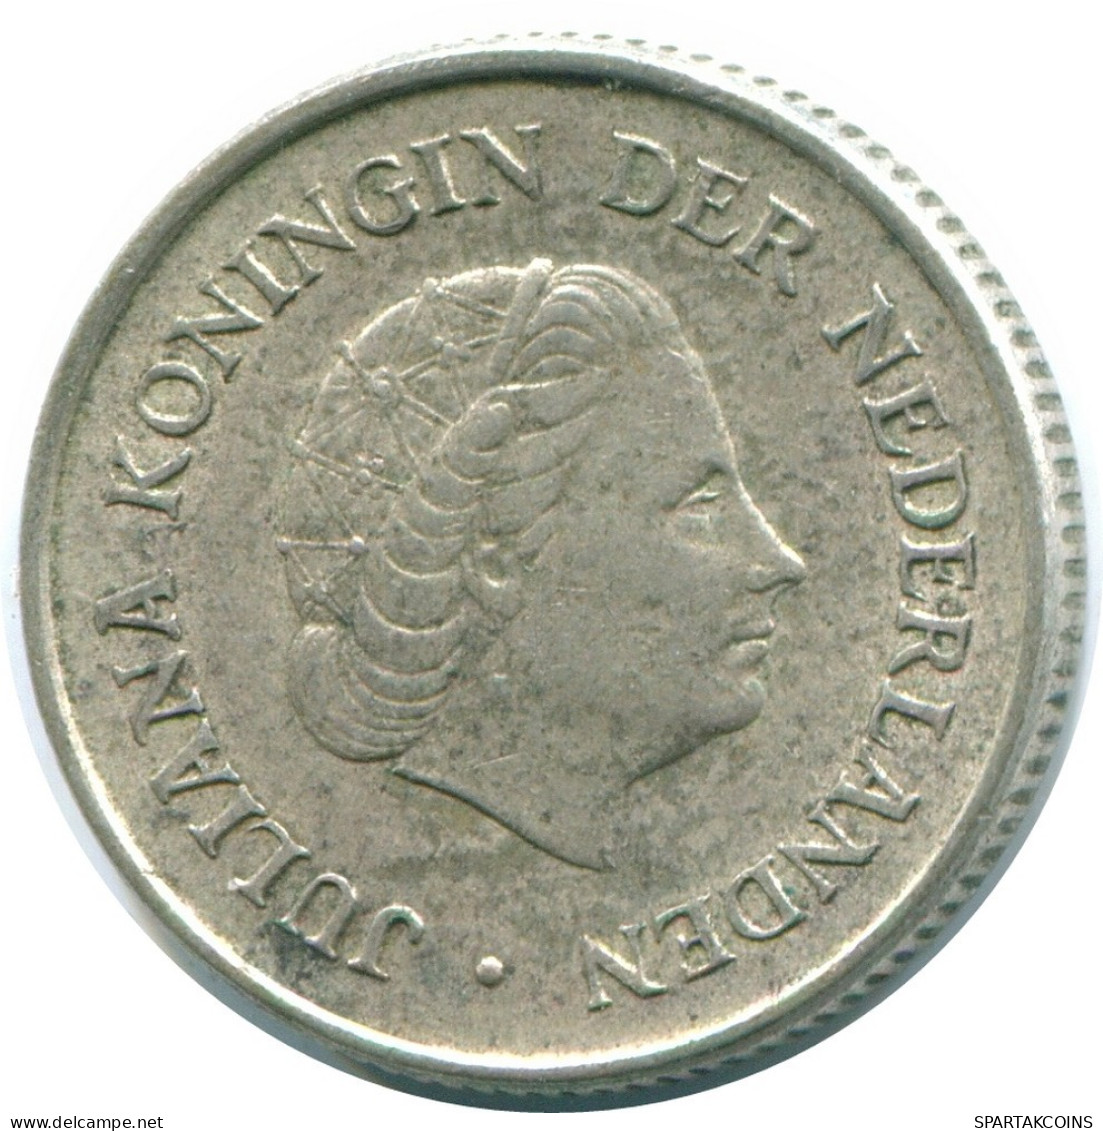 1/4 GULDEN 1970 NETHERLANDS ANTILLES SILVER Colonial Coin #NL11708.4.U.A - Niederländische Antillen